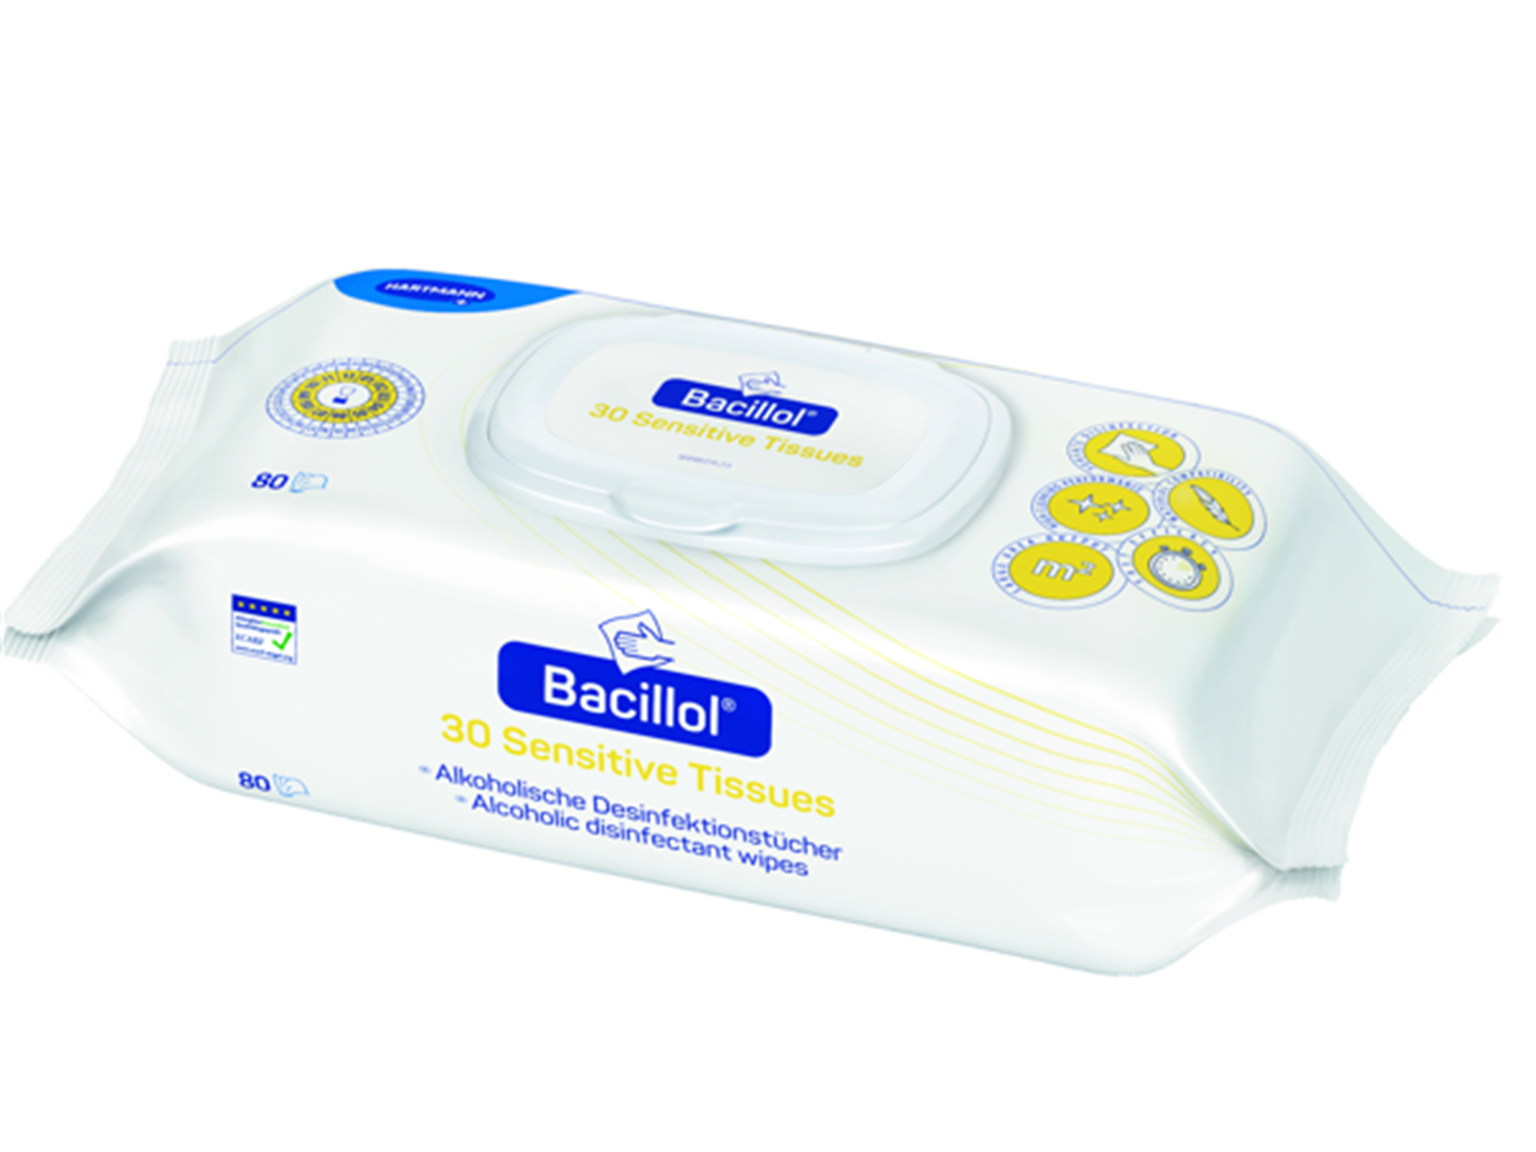 Bacillol Sensitiv 30 Tissues, Flow Pack, 80 Tücher im Pack, 180x200 mm